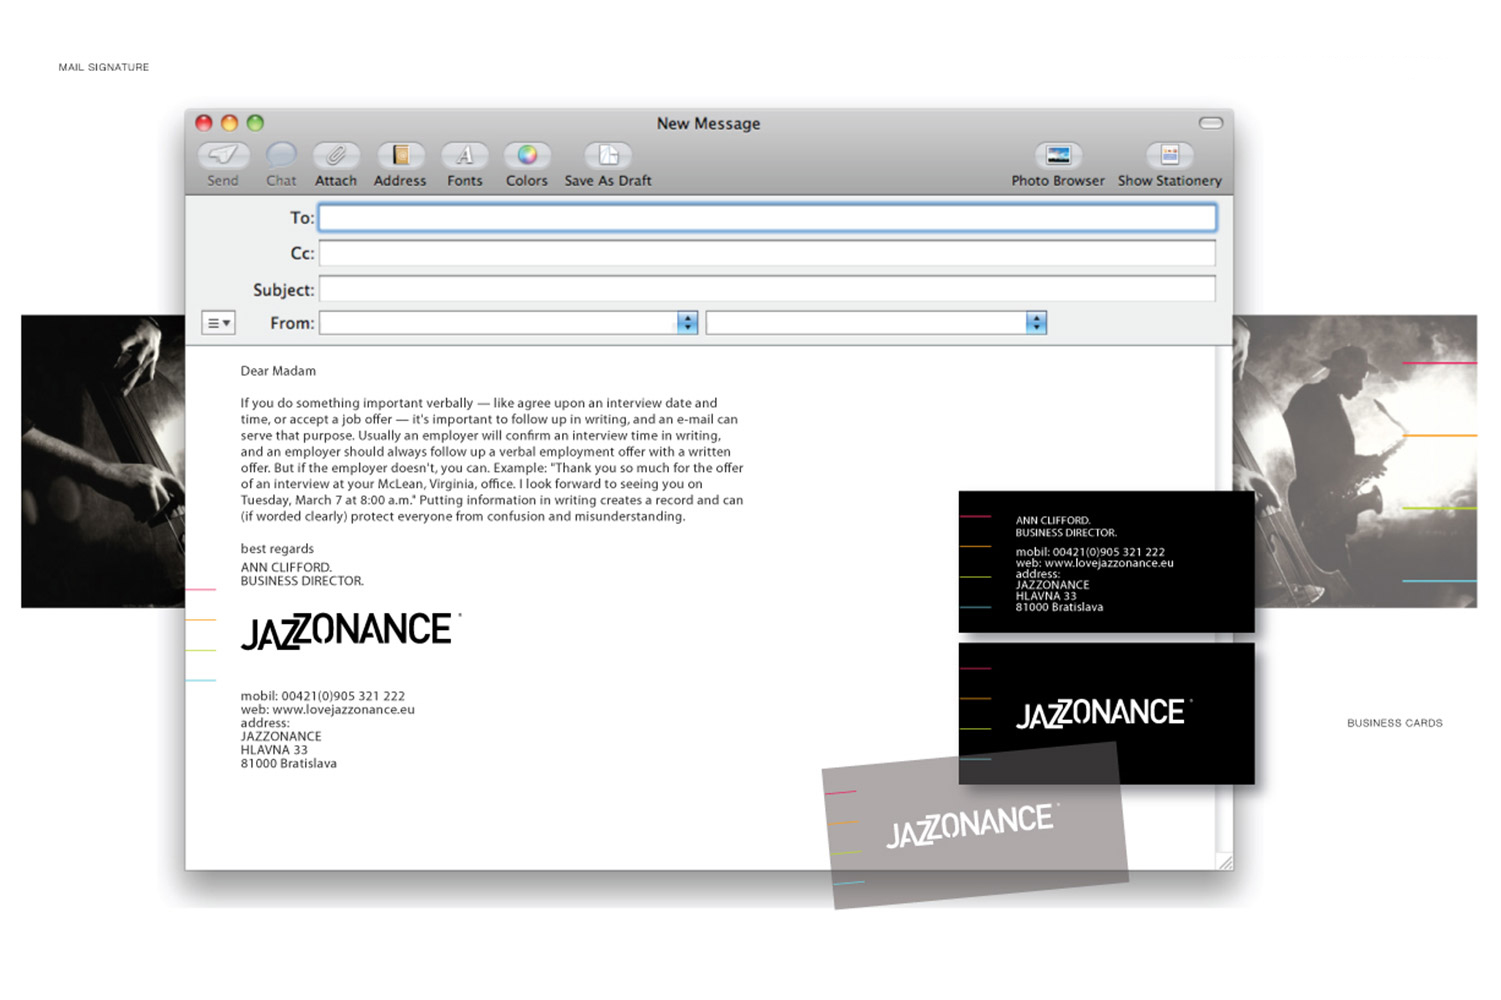 Jazzonance, corporate identity image